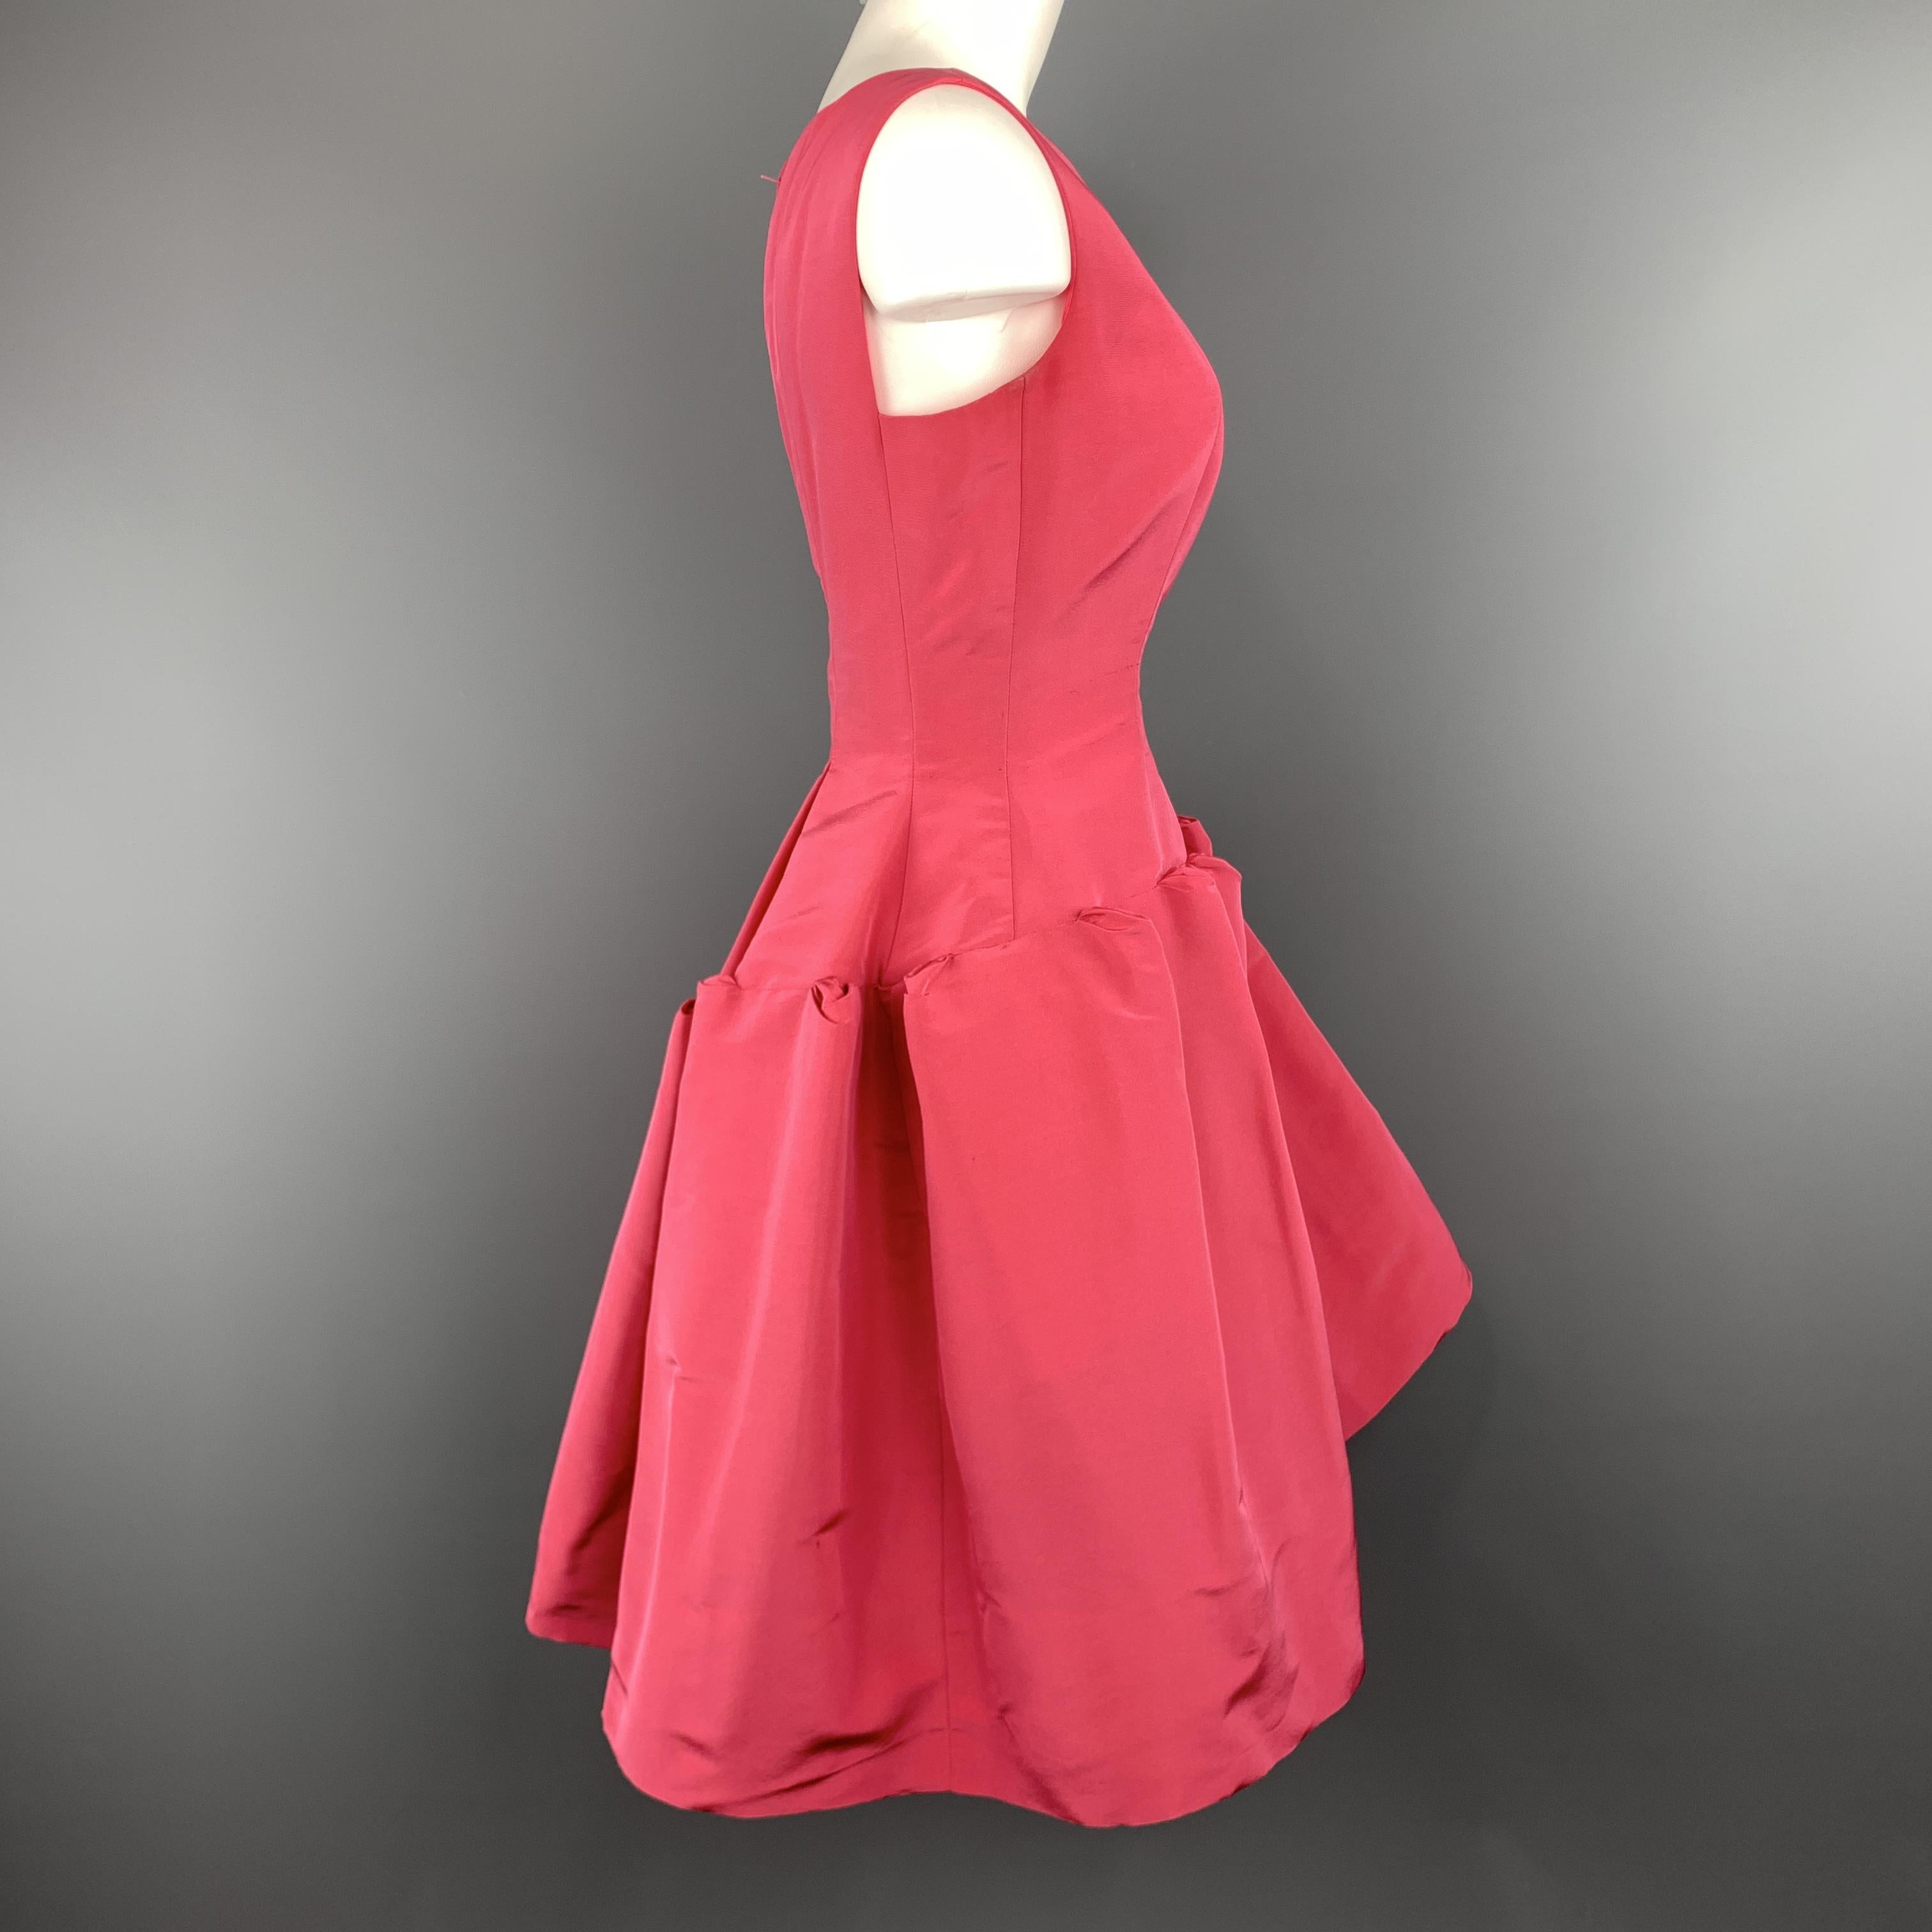 Women's OSCAR DE LA RENTA Size 8 Pink Faille Structured Skirt Cocktail Dress